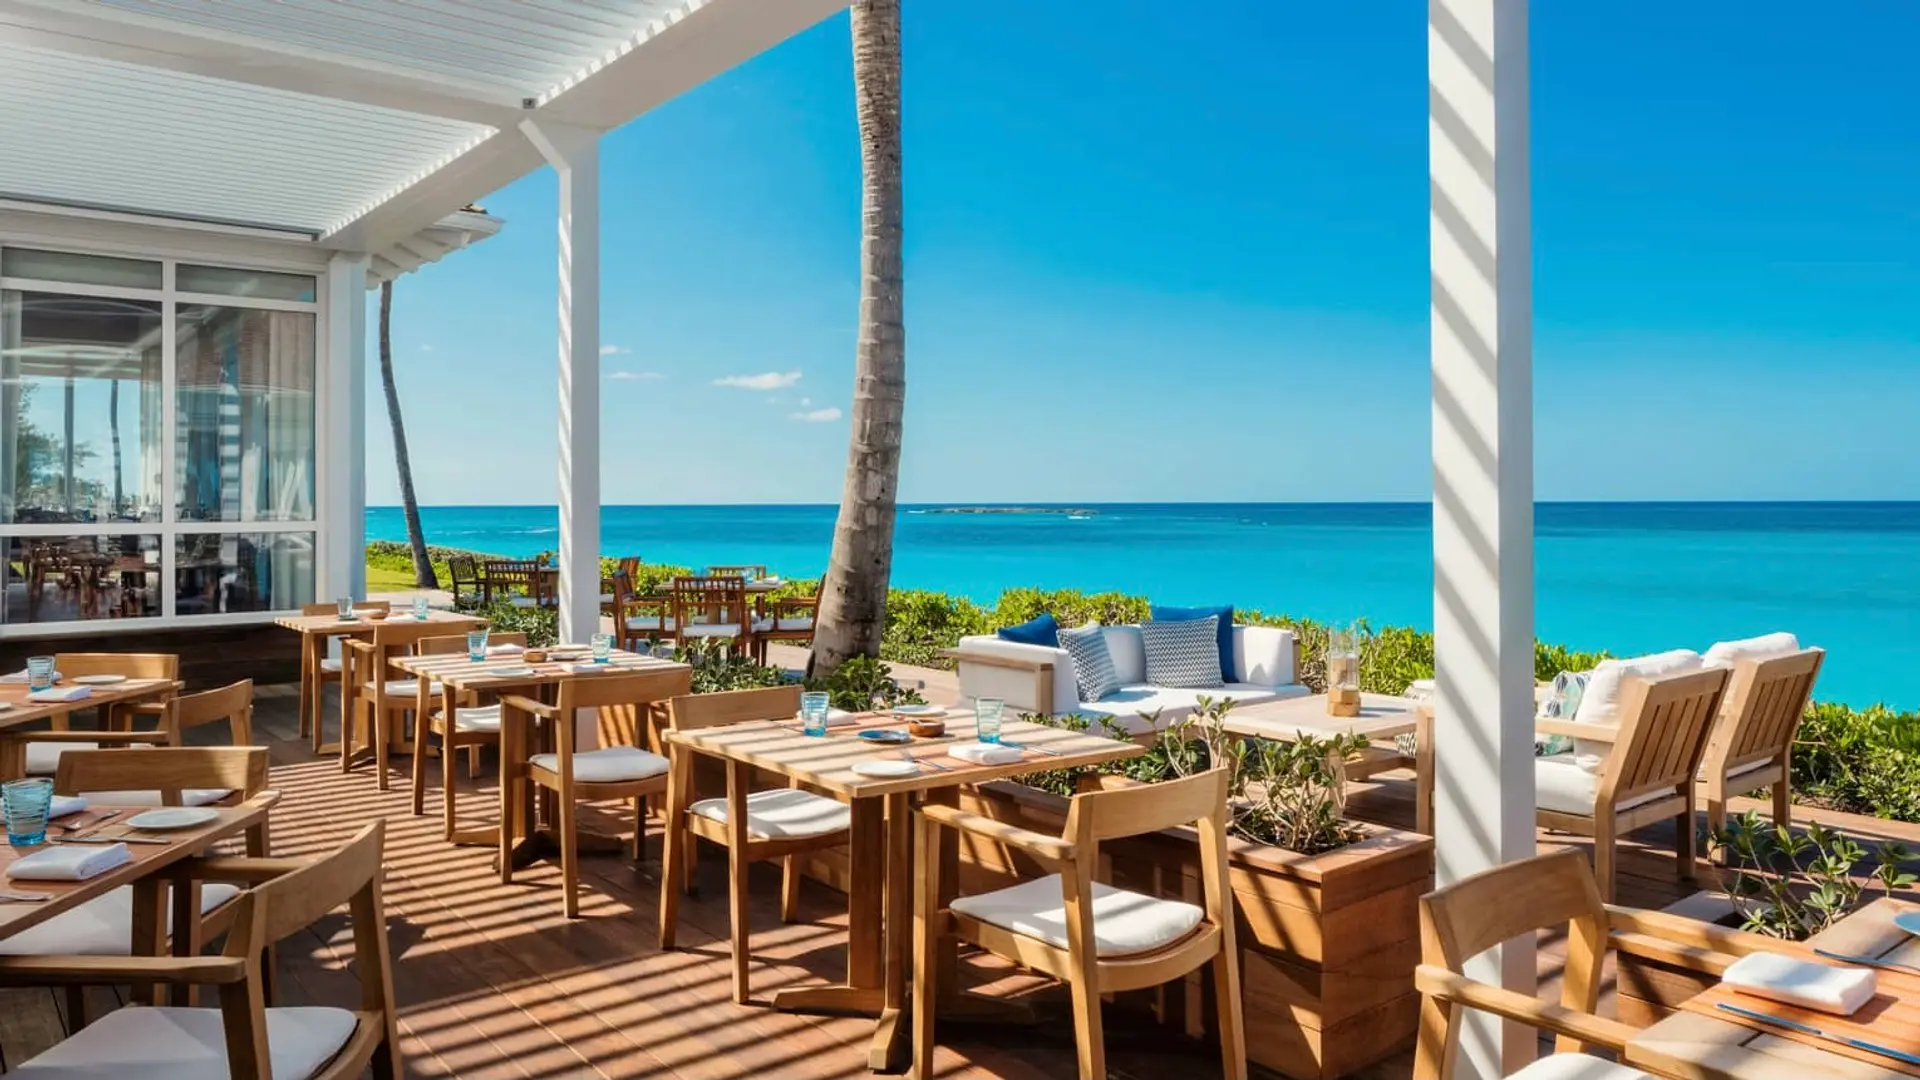 Hotel review Restaurants & Bars' - The Ocean Club, A Four Seasons Resort - 0